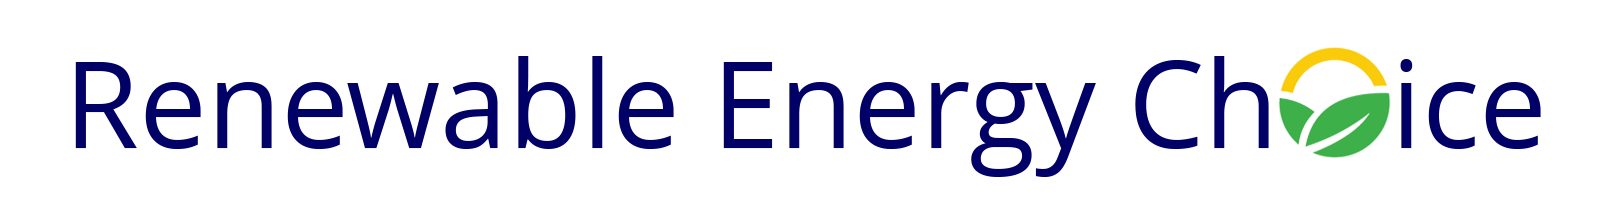 MELD Renewable Energy Choice logo